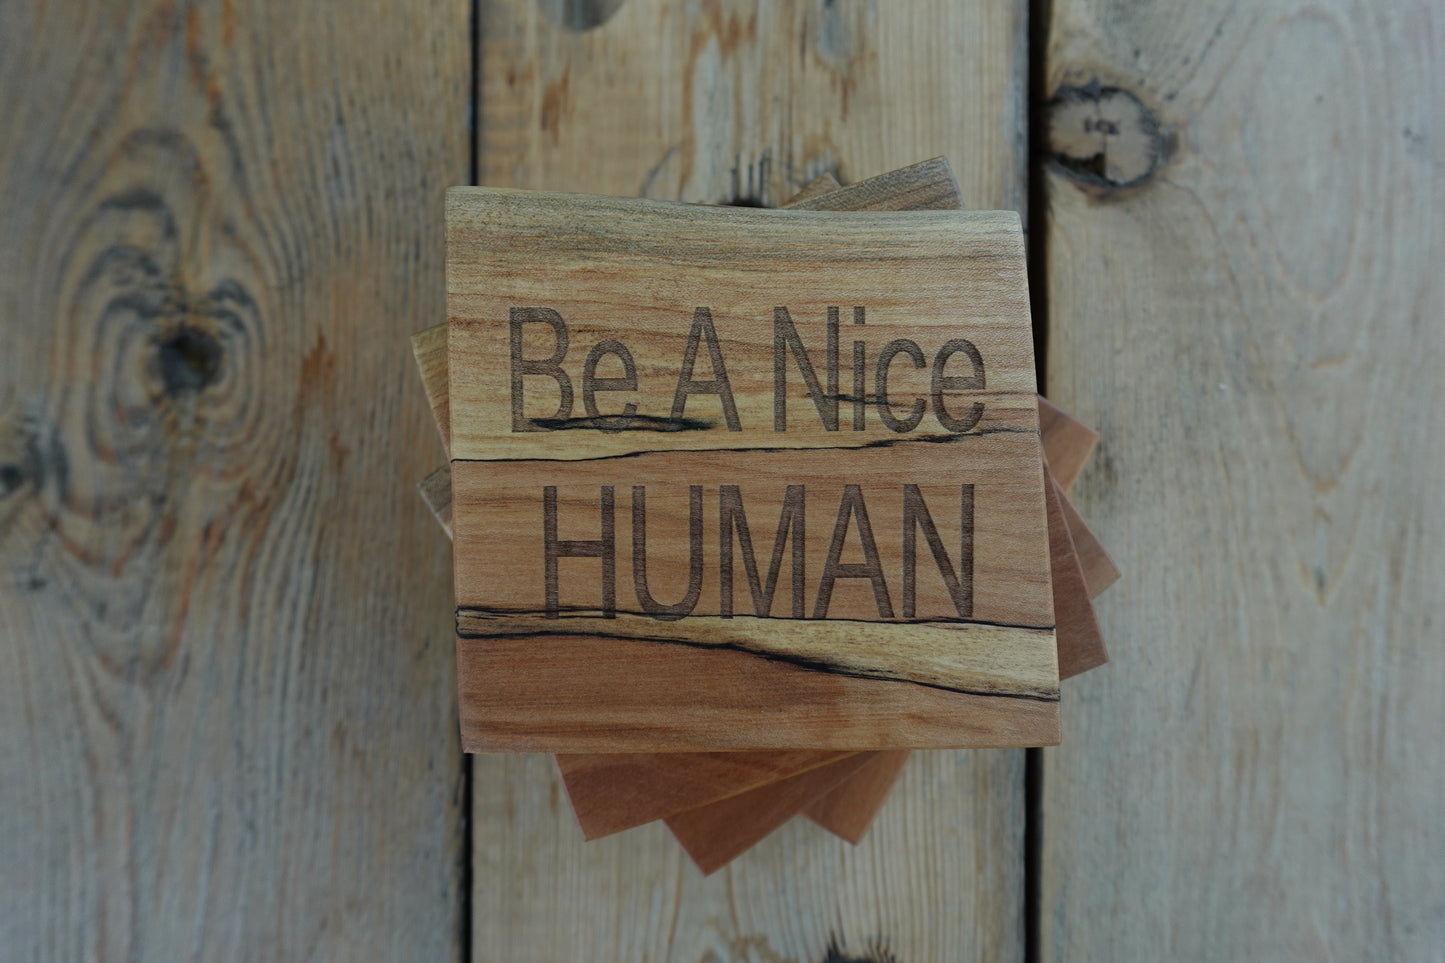 "Be A Nice Human" Wooden Coaster Set